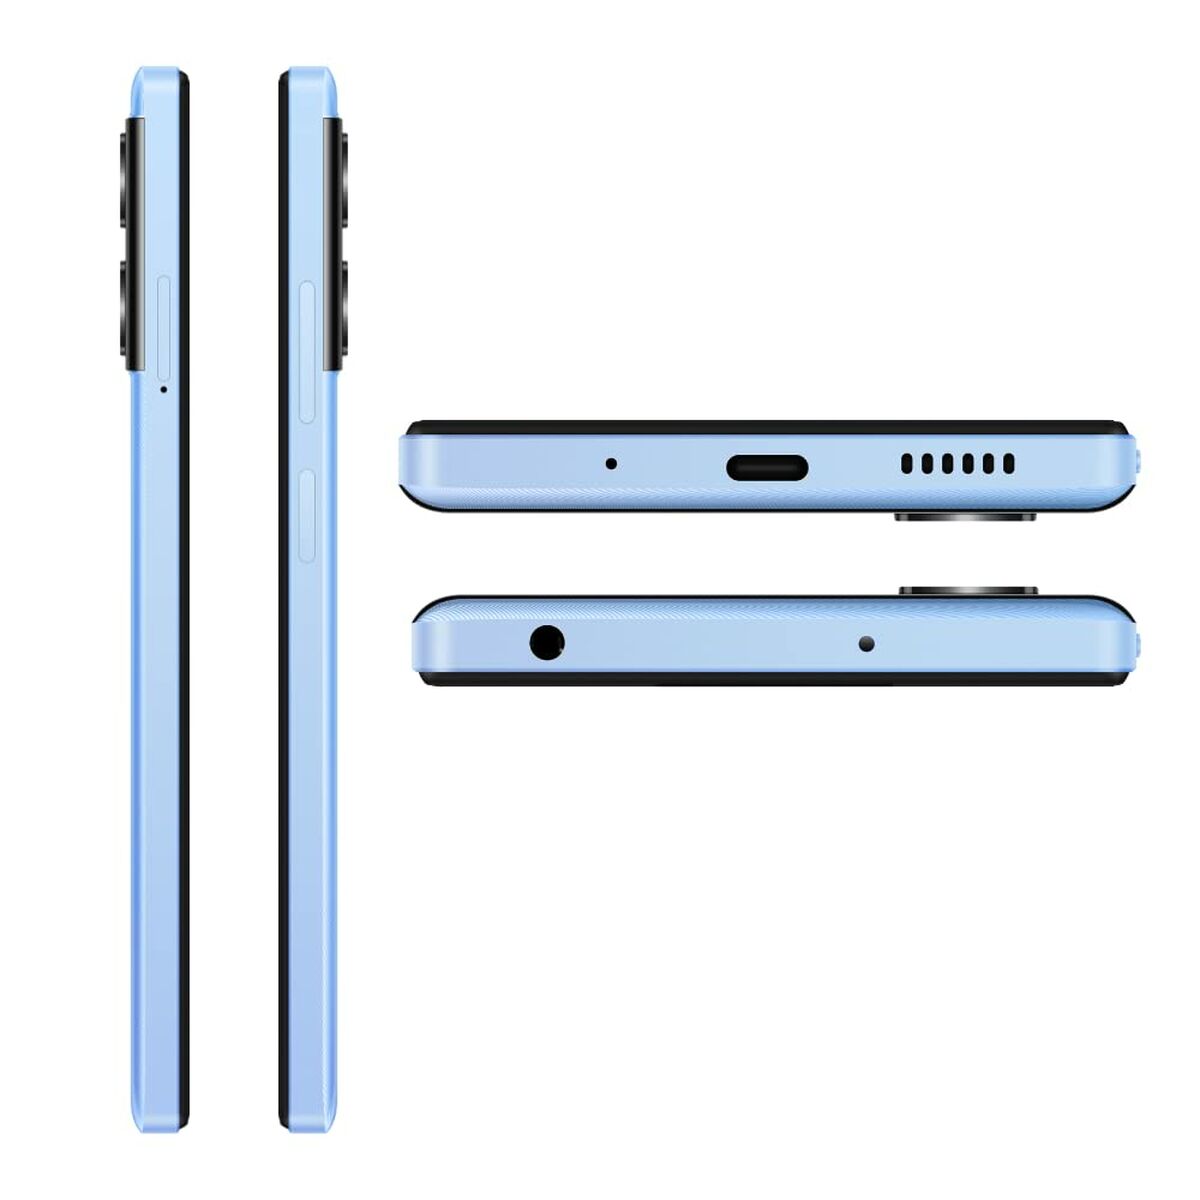 Smartphone Poco M4 Bleu 16 GB RAM 128 GB 6,58“